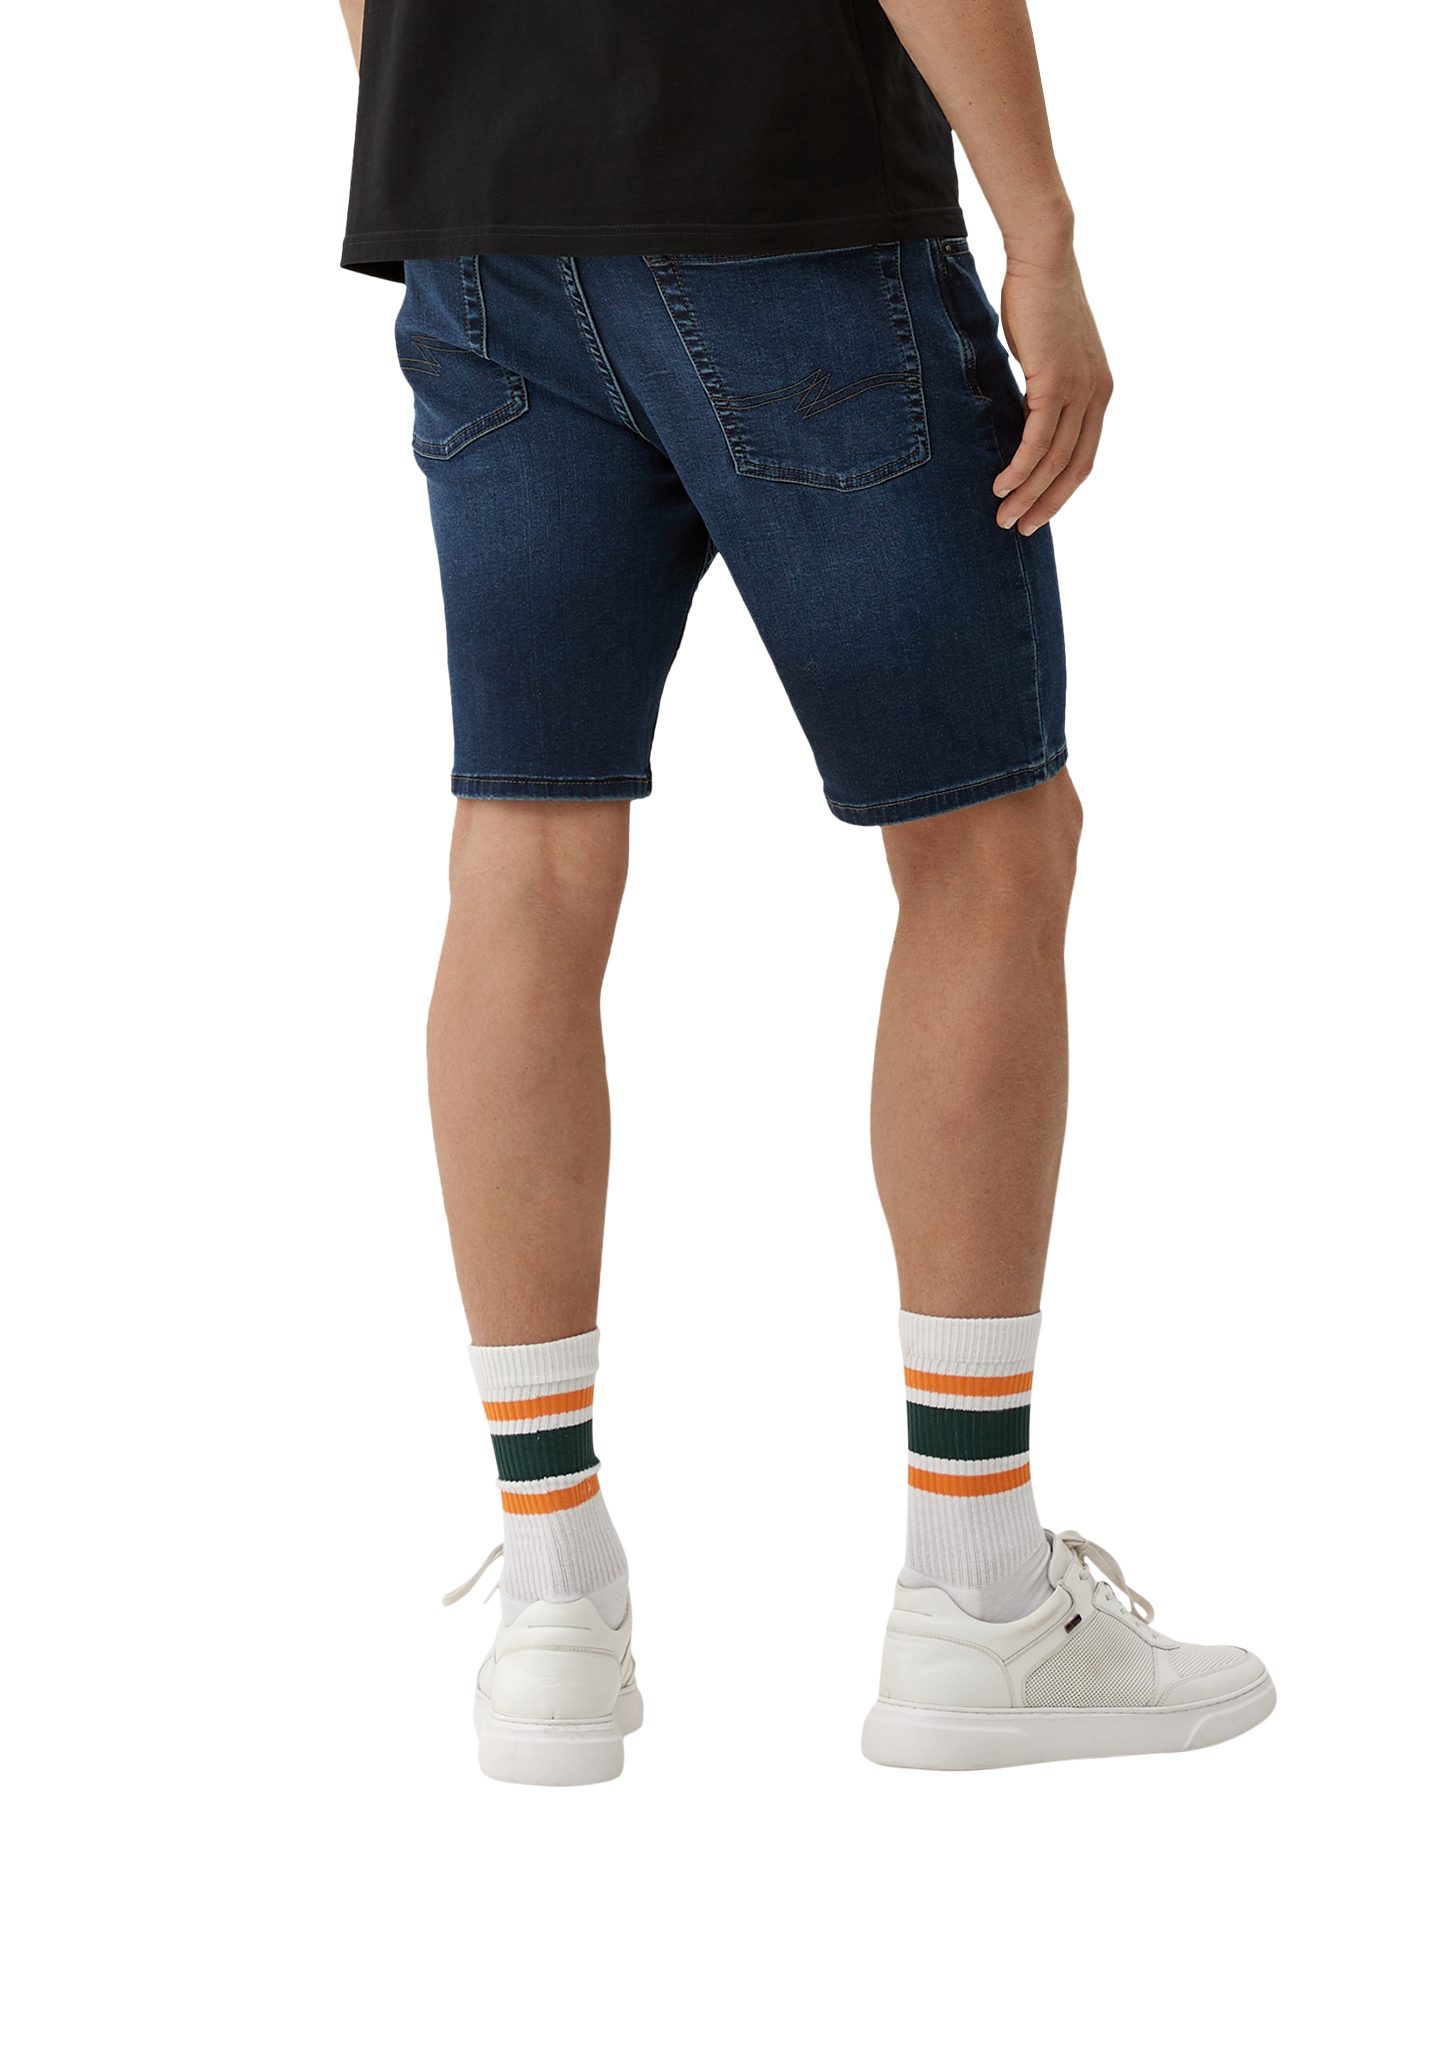 Leg Straight John Waschung s.Oliver Fit / Jeans-Shorts / Mid Rise Jeansshorts Regular / QS ozeanblau